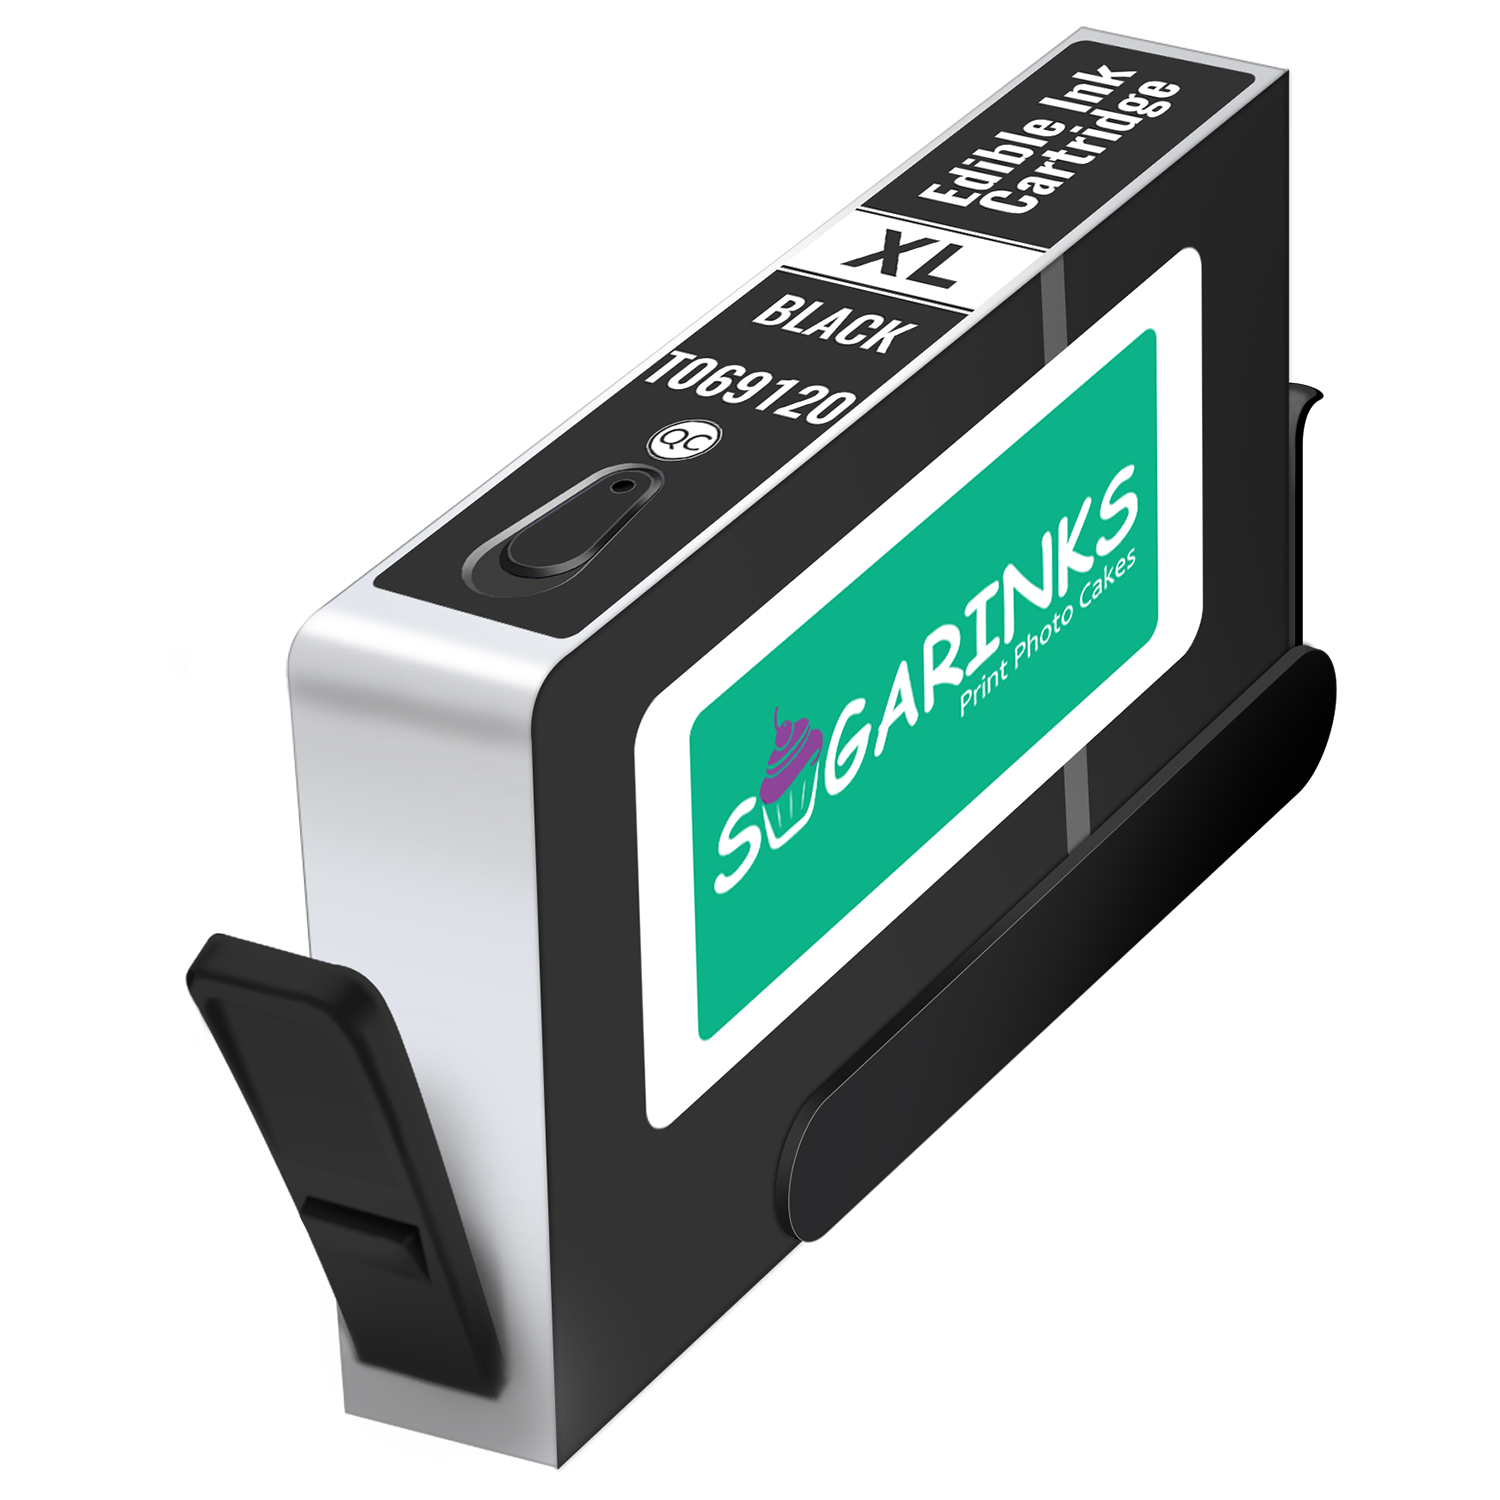 Sugarinks Edible Ink Cartridges T069120 for Epson Edible Printers – Black 